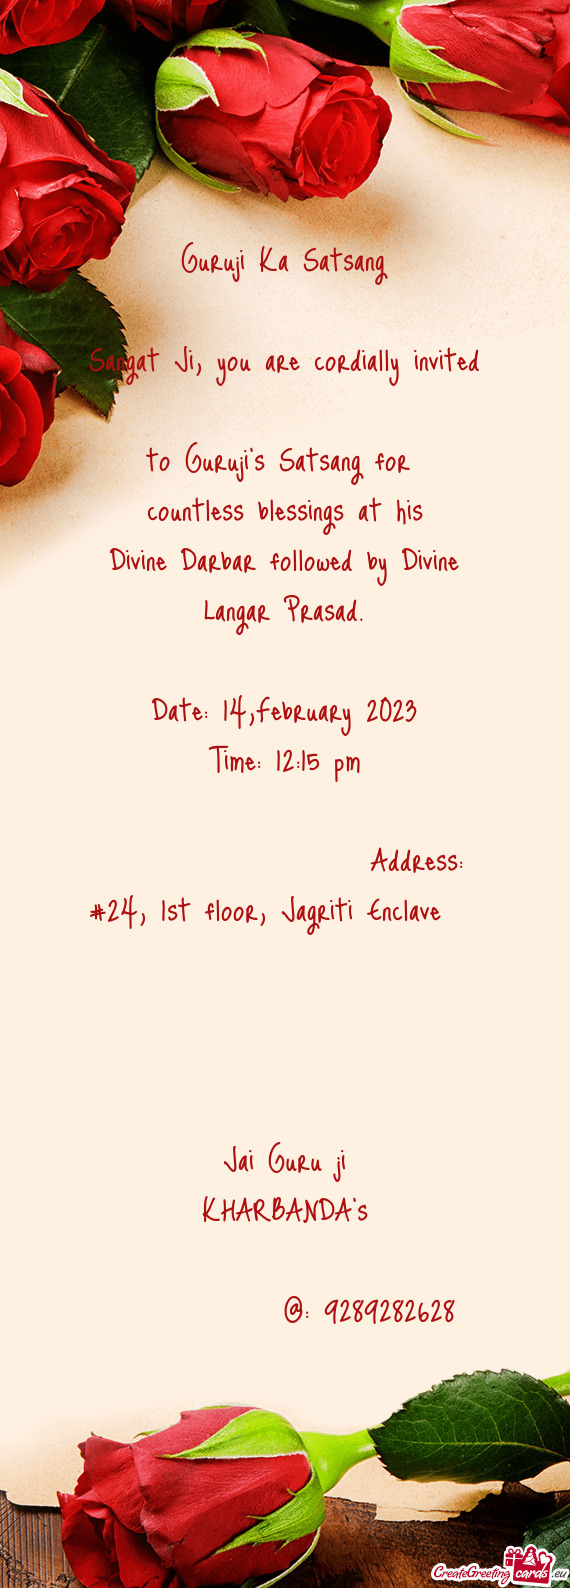 Divine Darbar followed by Divine Langar Prasad